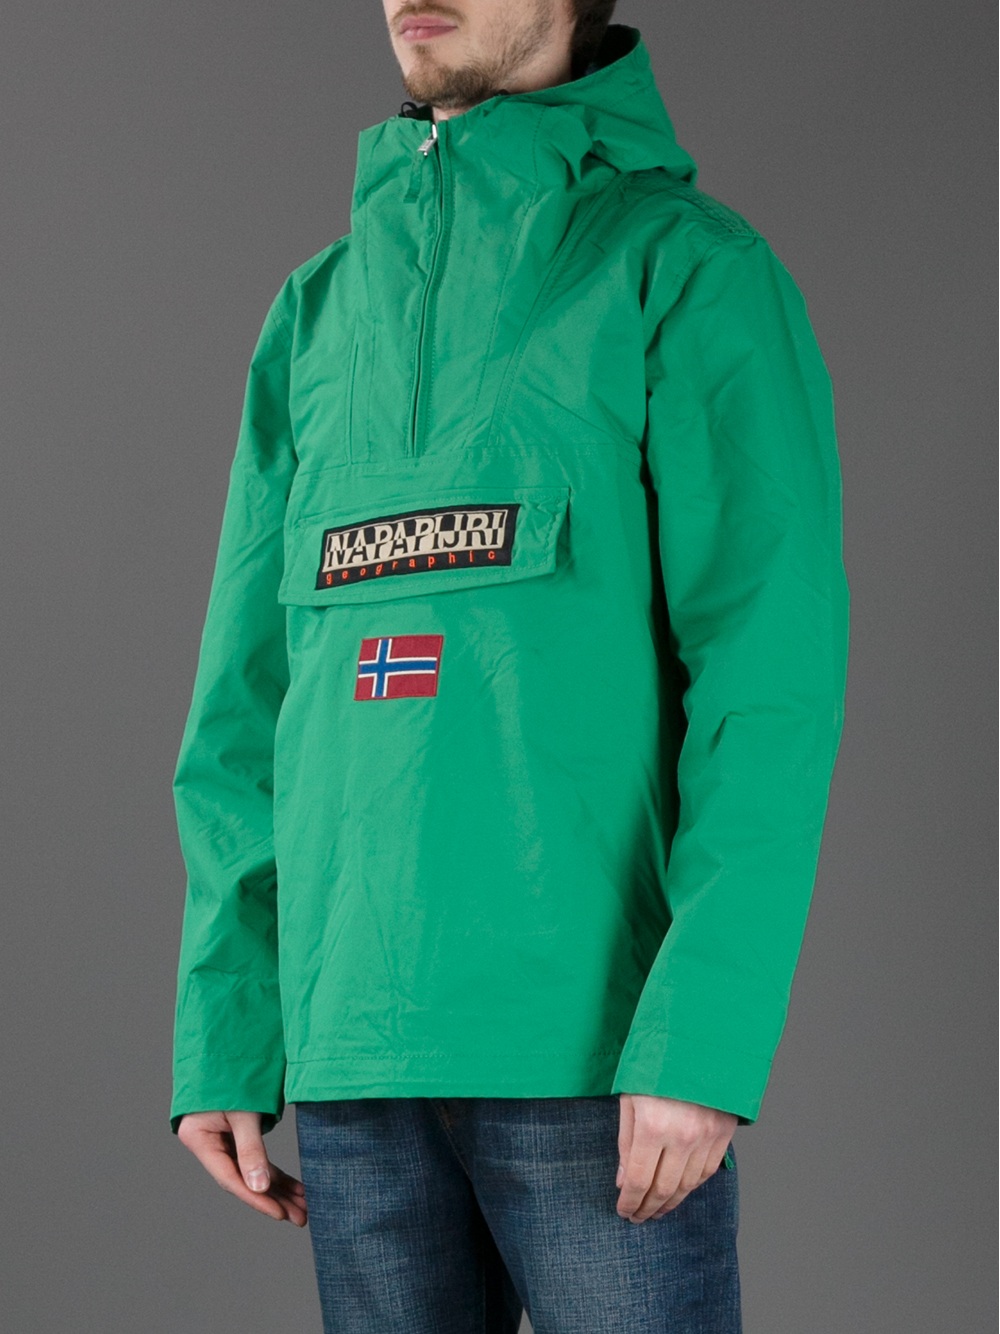 Napapijri Rainforest Jacket in Green for Men - Lyst